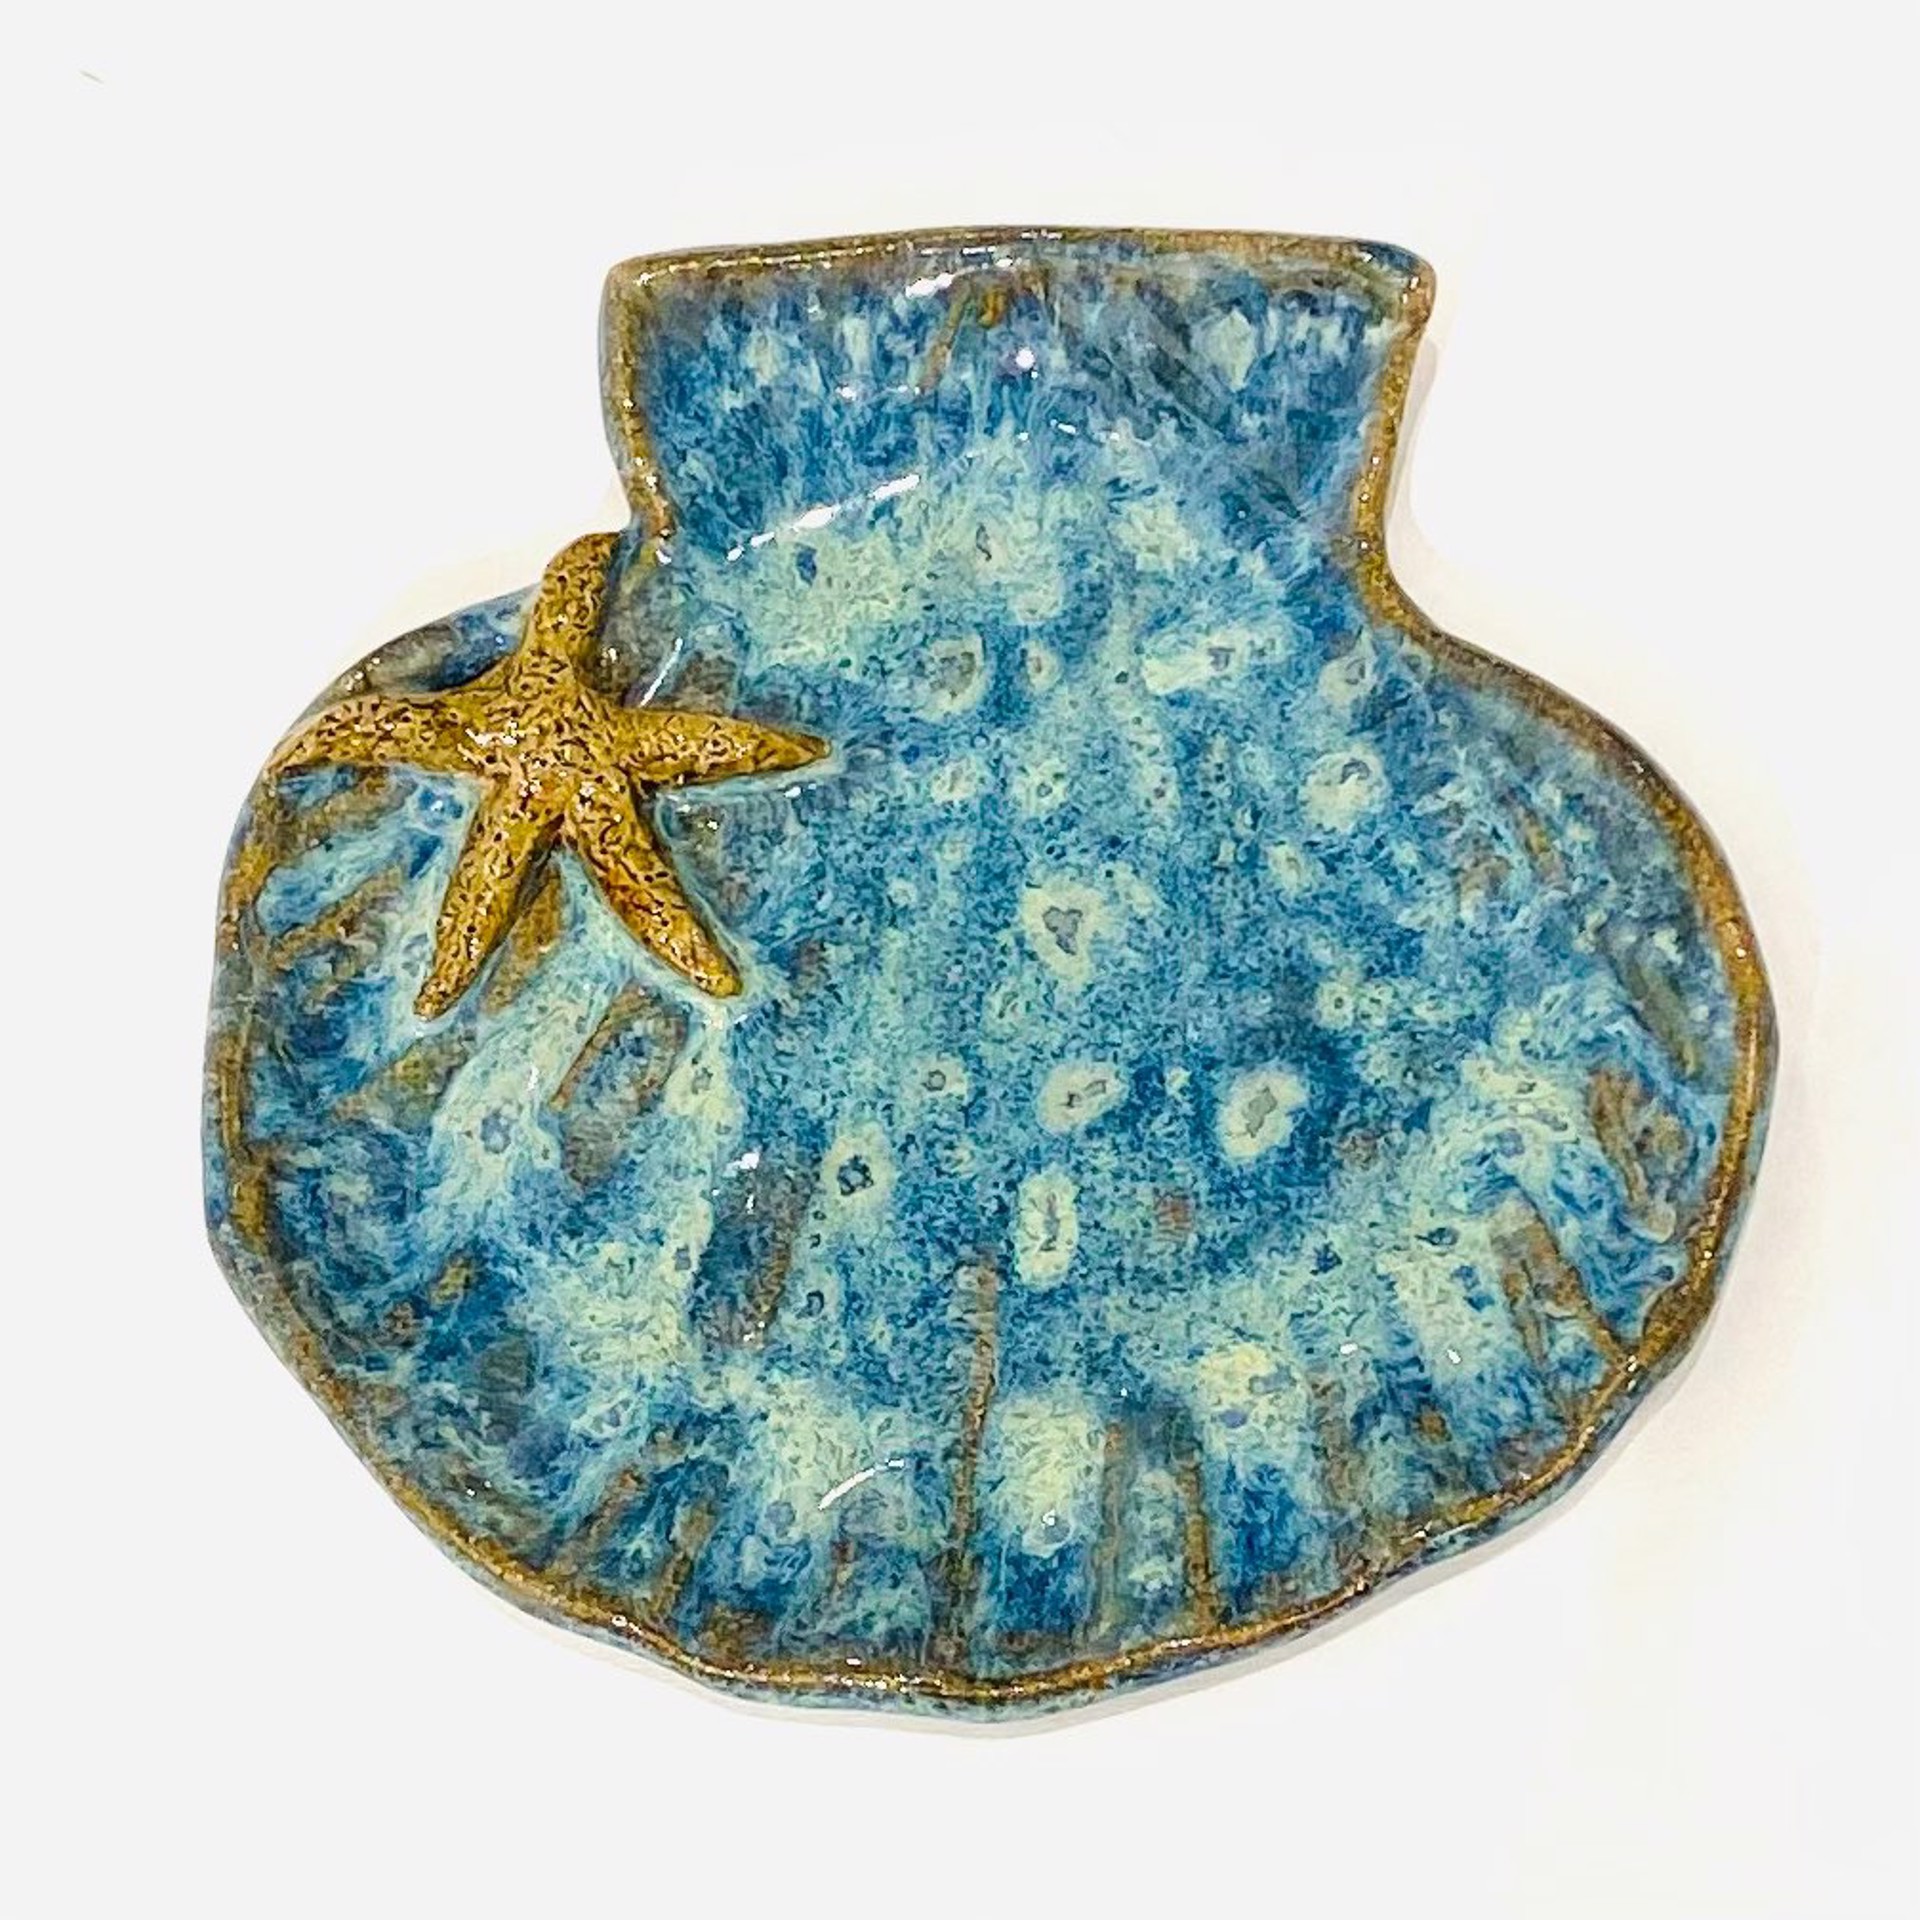 Logan22-873 Shell Dish with Starfish (Blue Glaze) by Jim & Steffi Logan